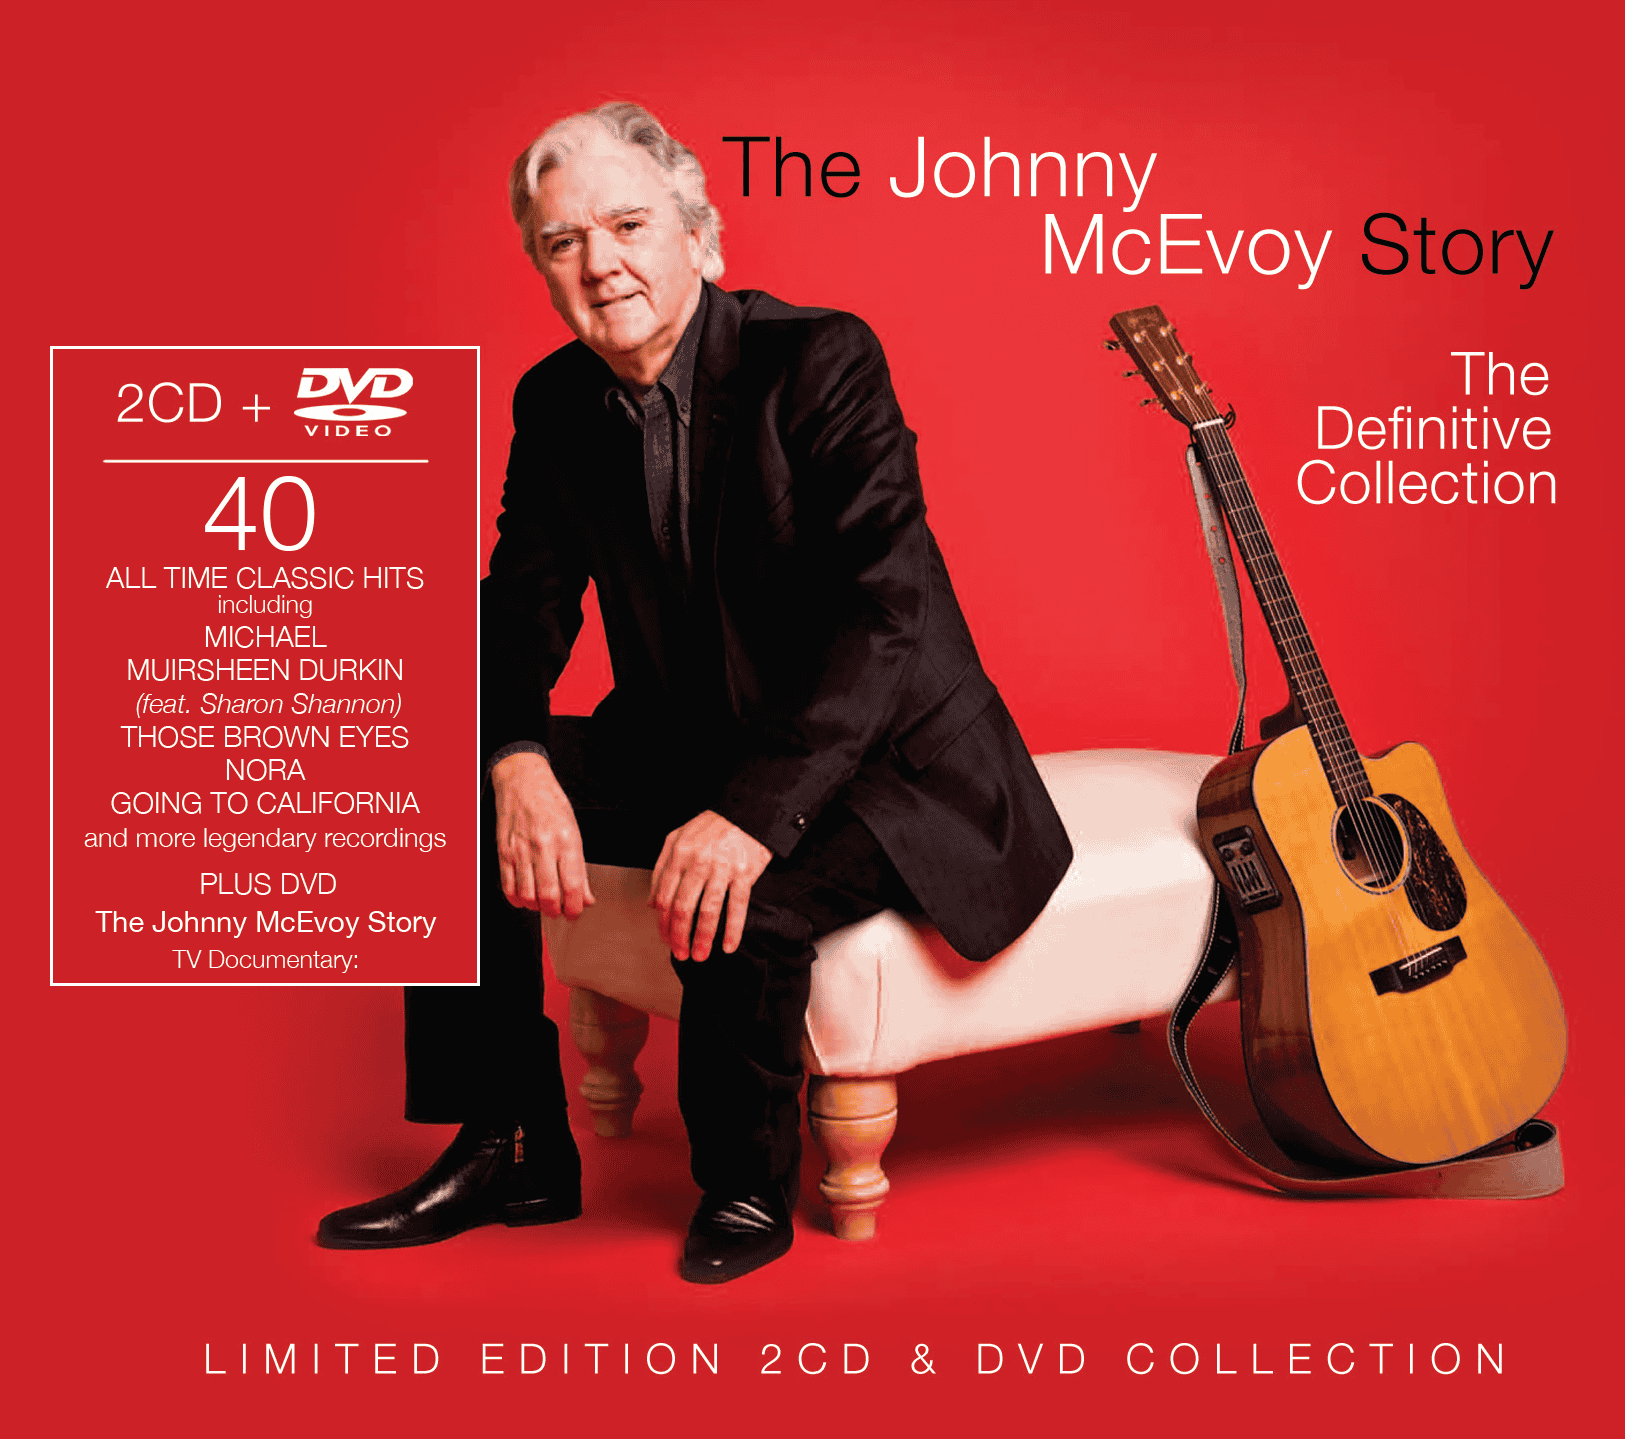 The Johnny McEvoy Story (The Definitive Collection) - Johnny McEvoy [2CD + DVD]